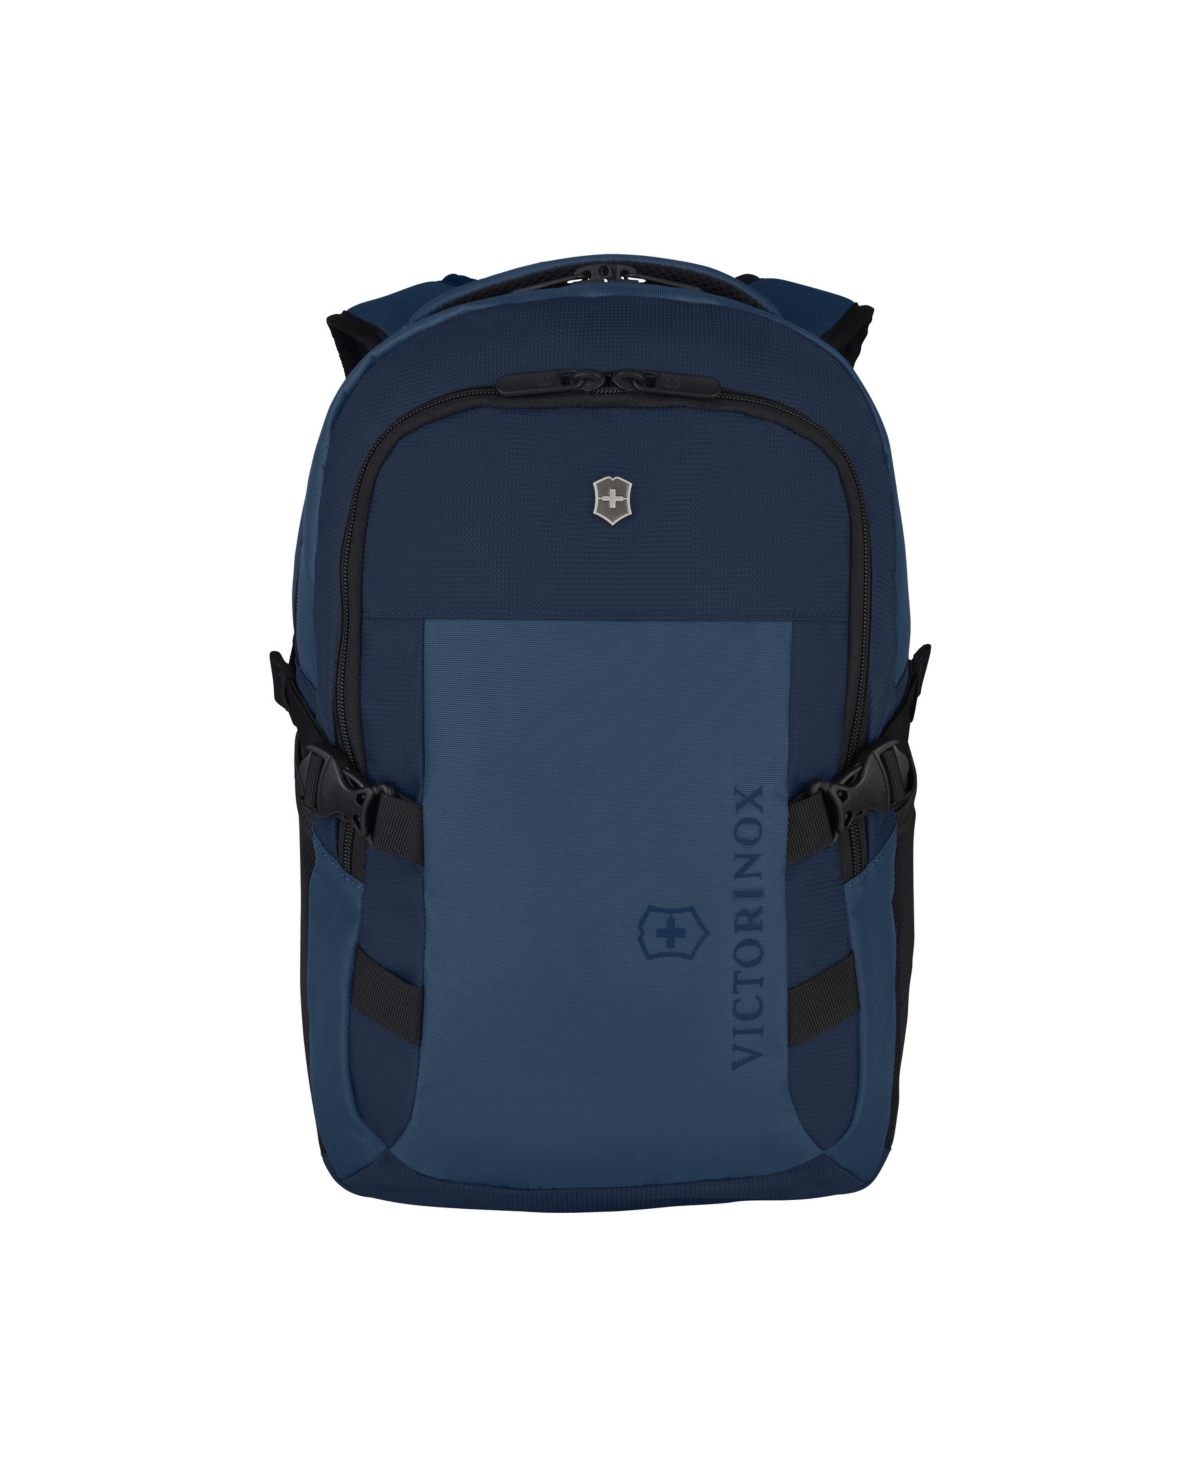 Vx Sport Evo Compact Laptop Backpack - Black